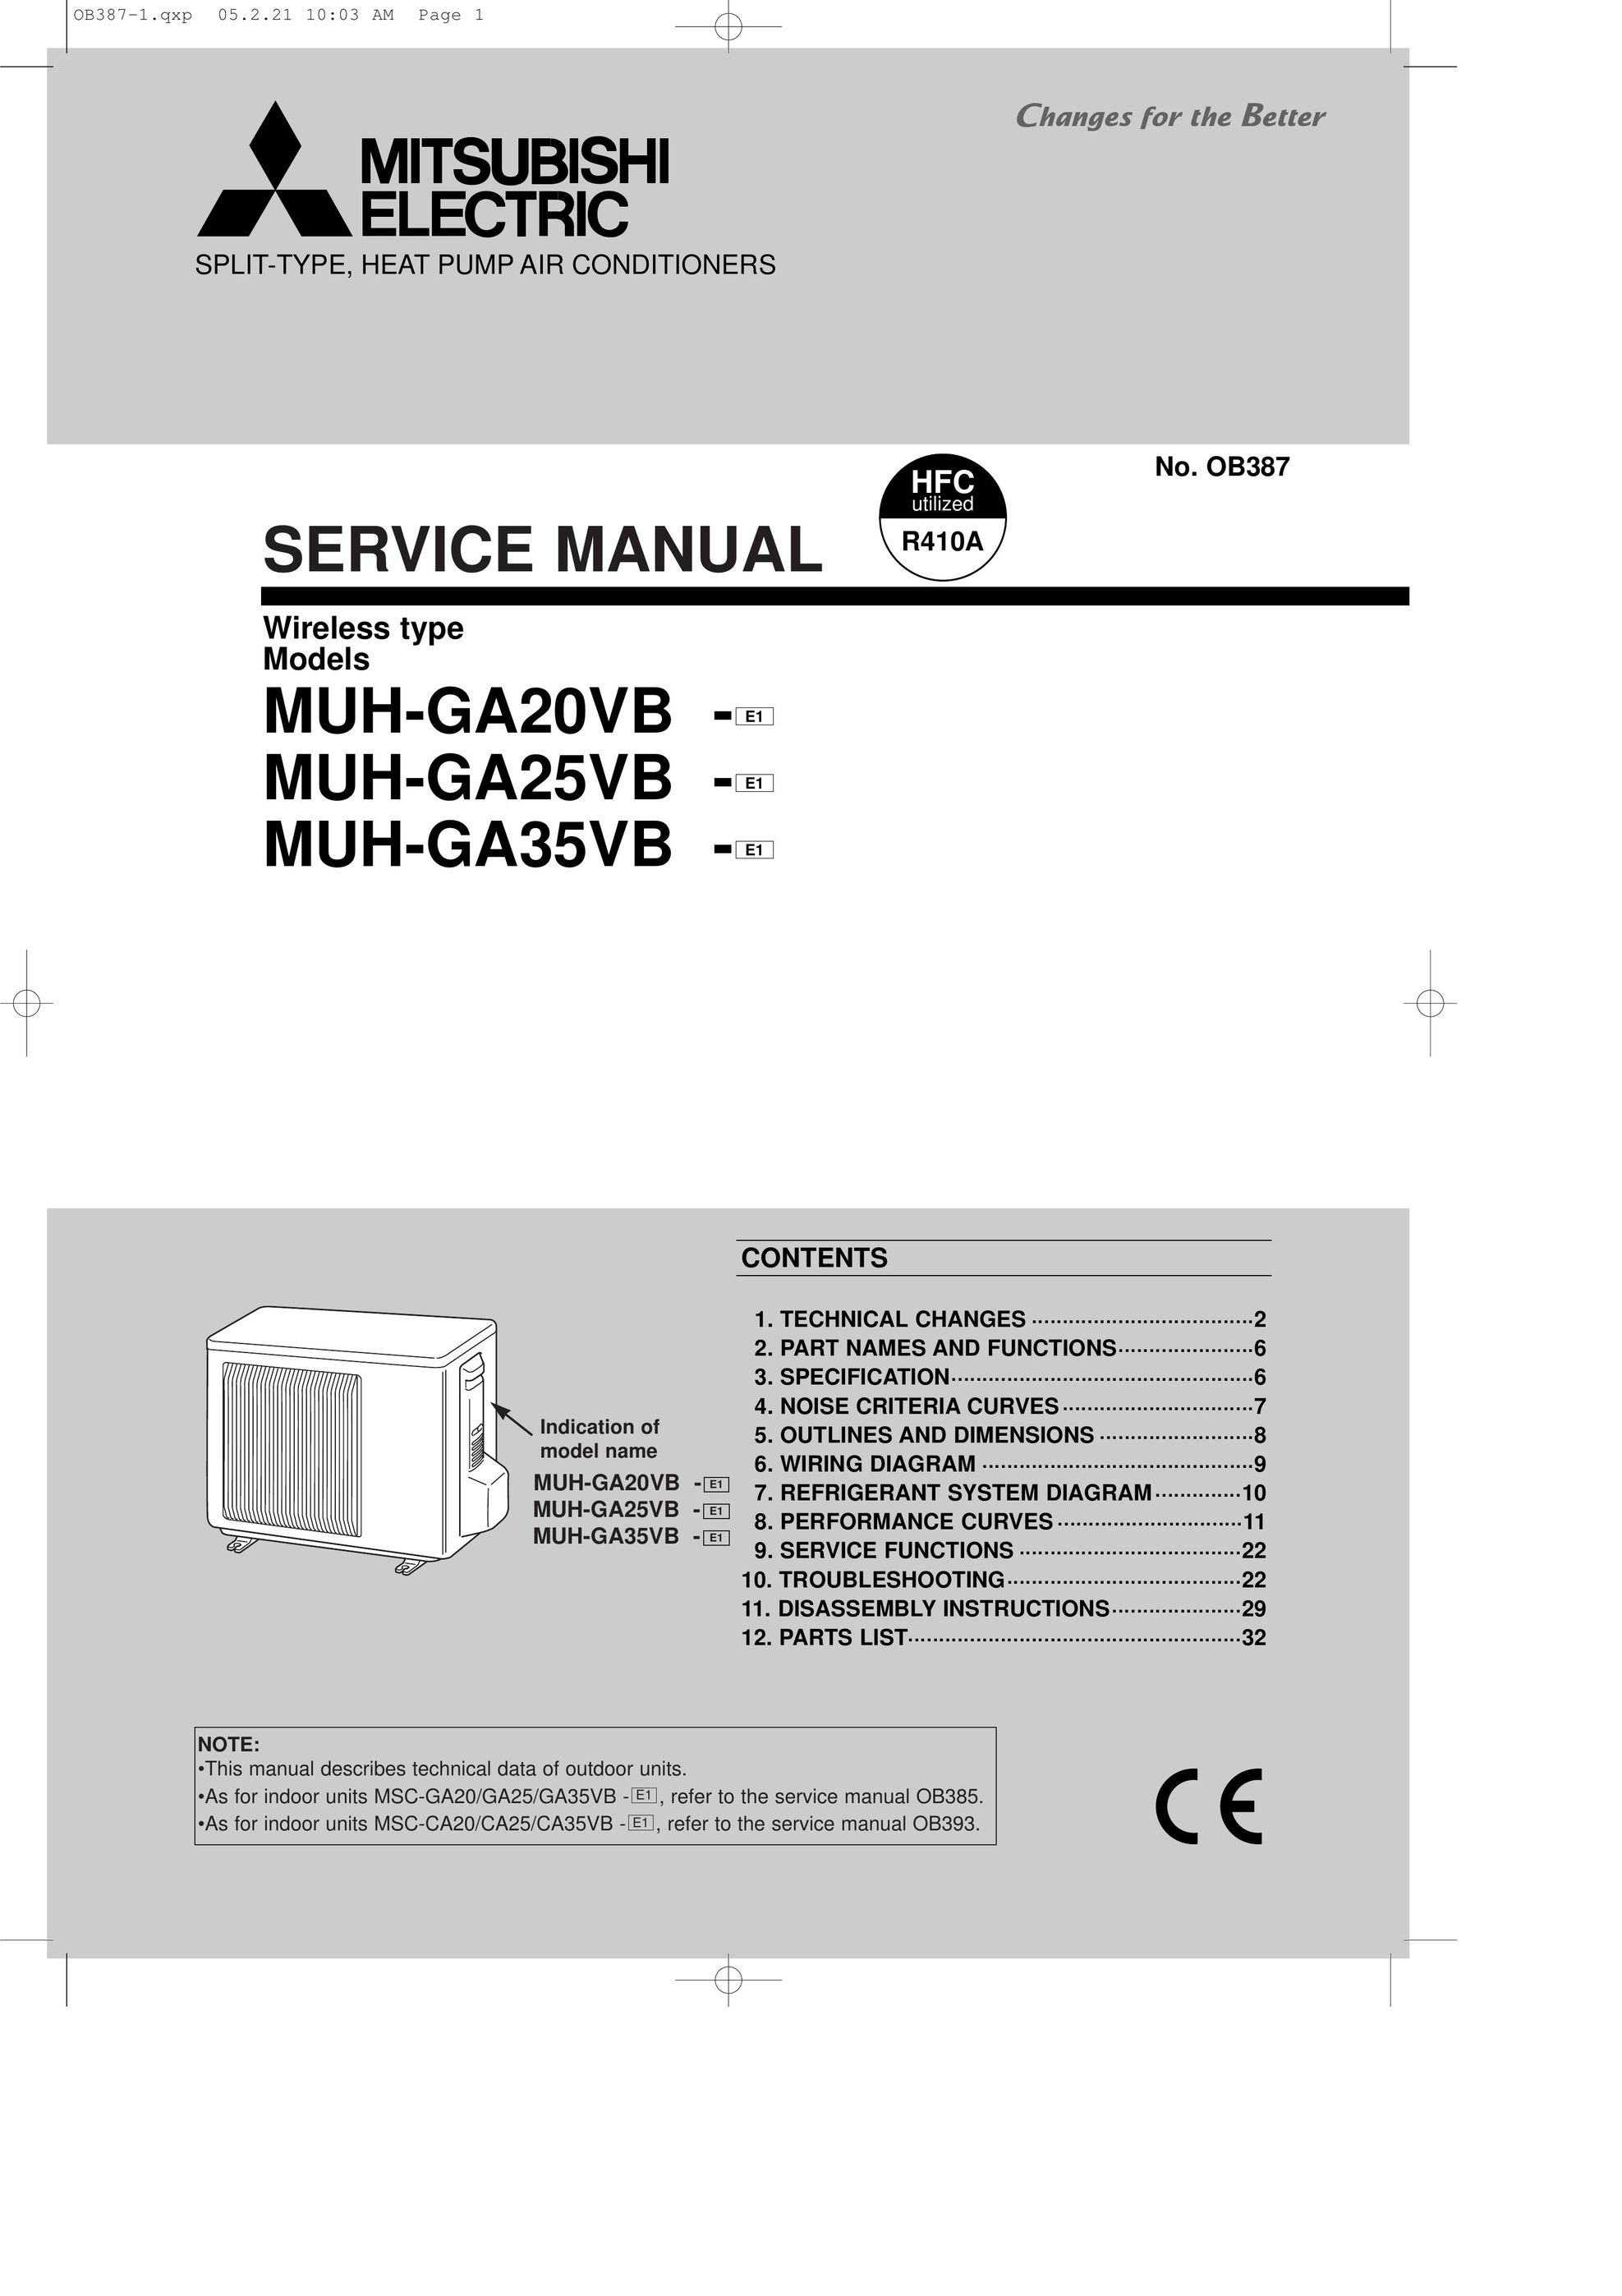 Pioneer MUH-GA35VB Air Conditioner User Manual